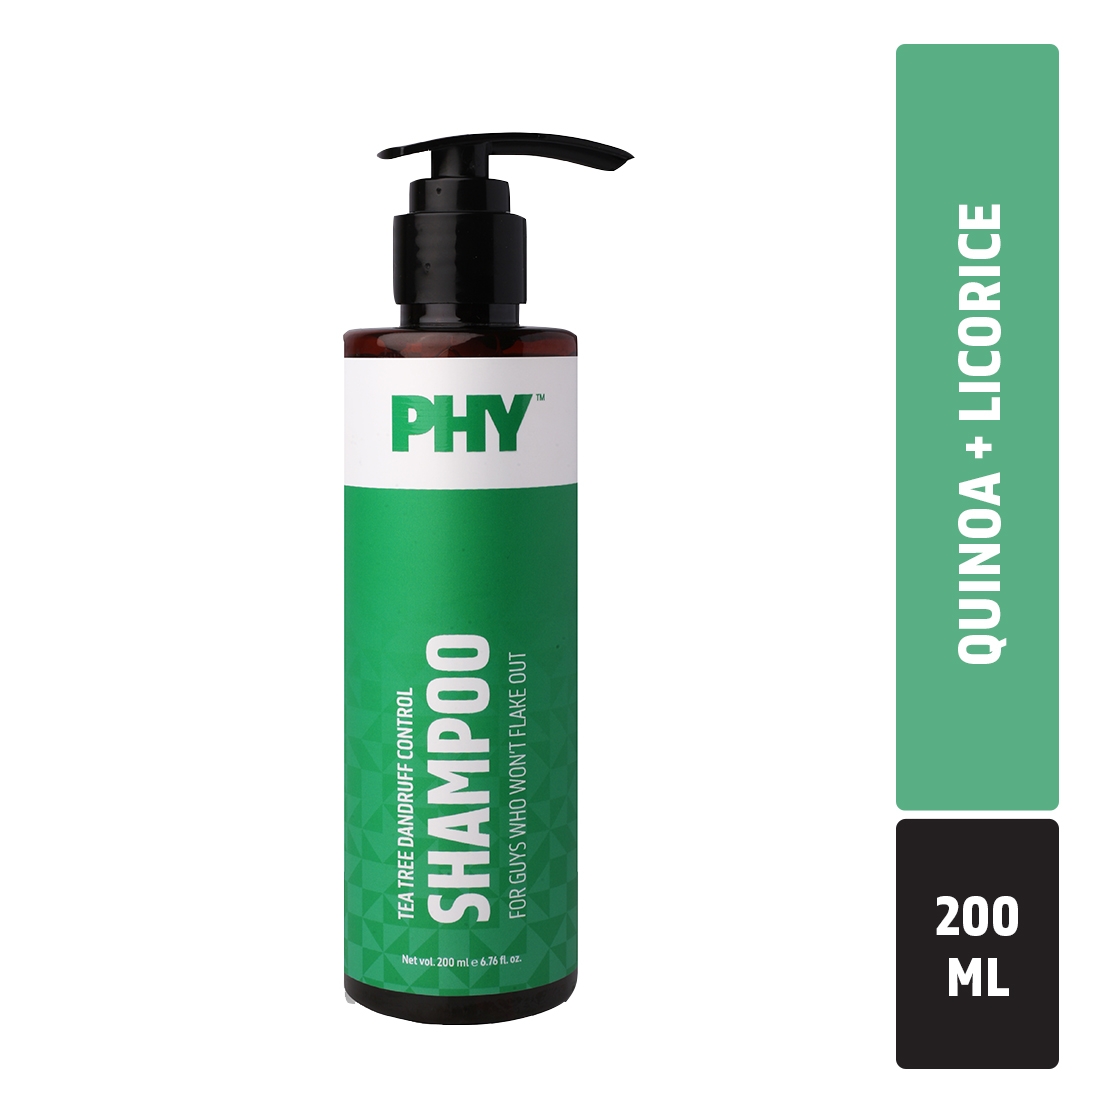 Phy | Phy Tea Tree Dandruff Control Shampoo 0